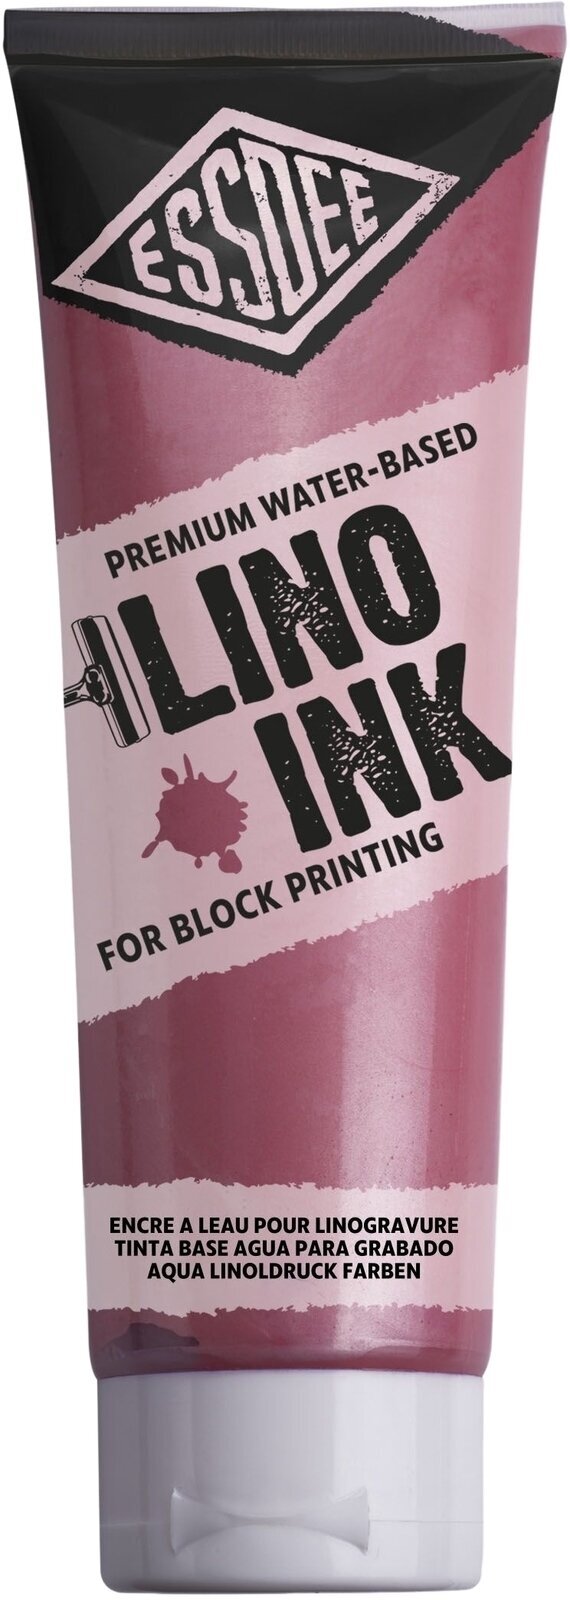 Vernice per linoleografia Essdee Block Printing Ink Vernice per linoleografia Pearlescent Pink 300 ml